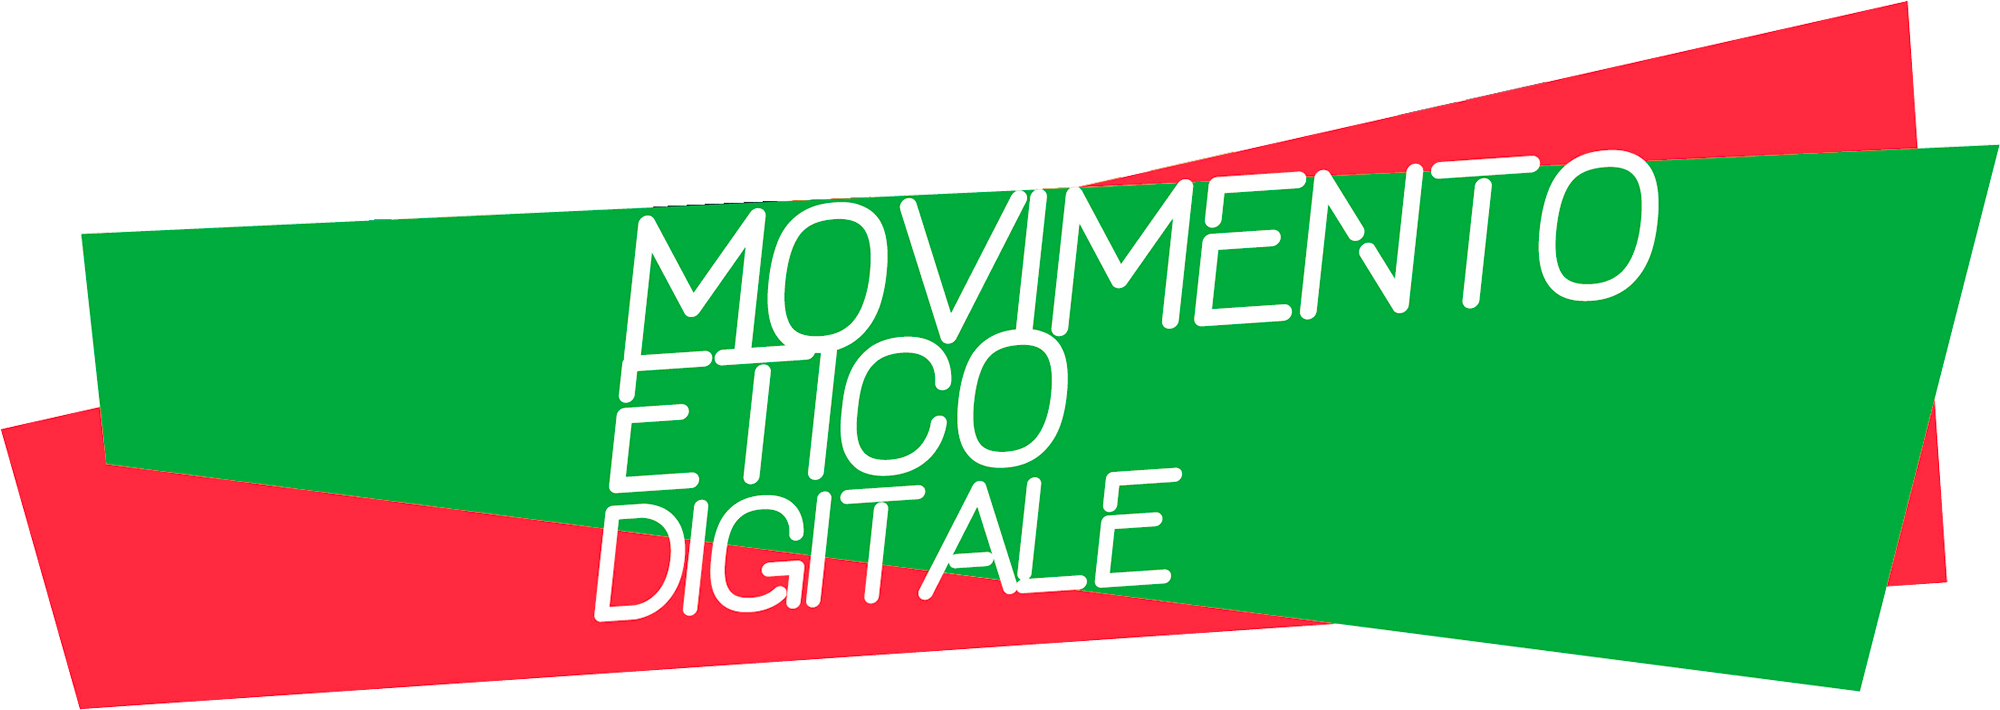 Movimento Etico Digitale